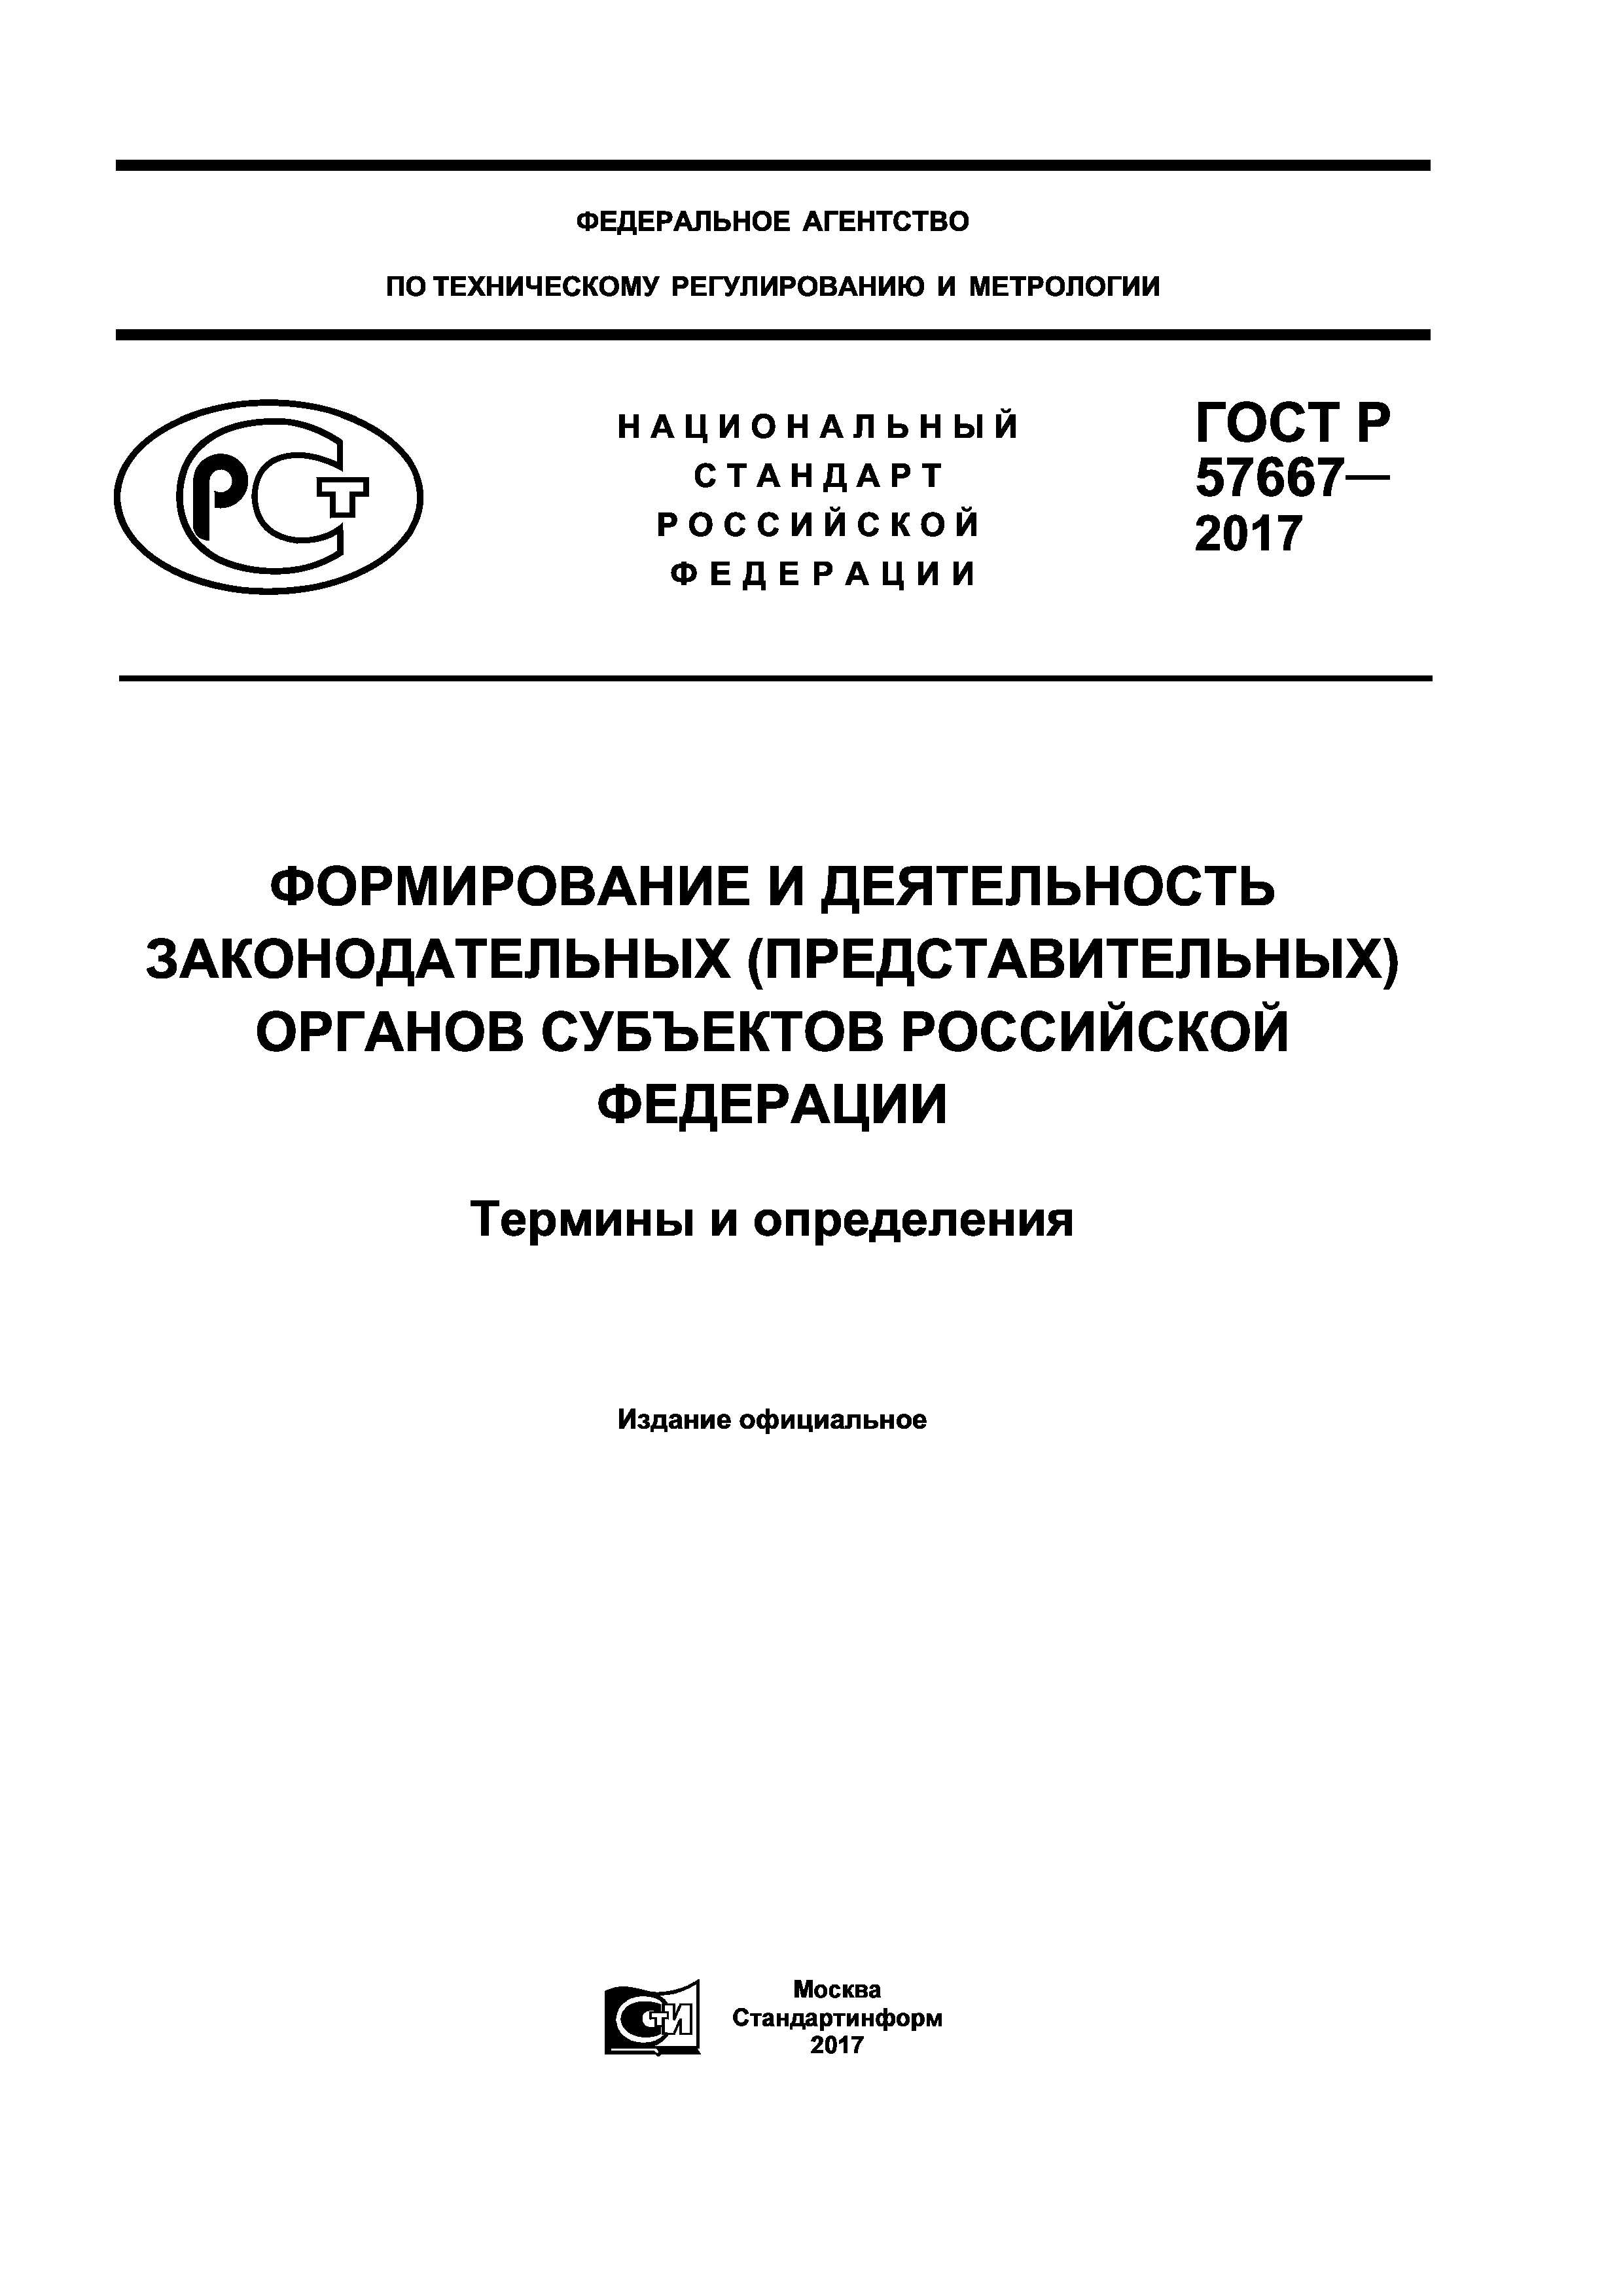 ГОСТ Р 57667-2017